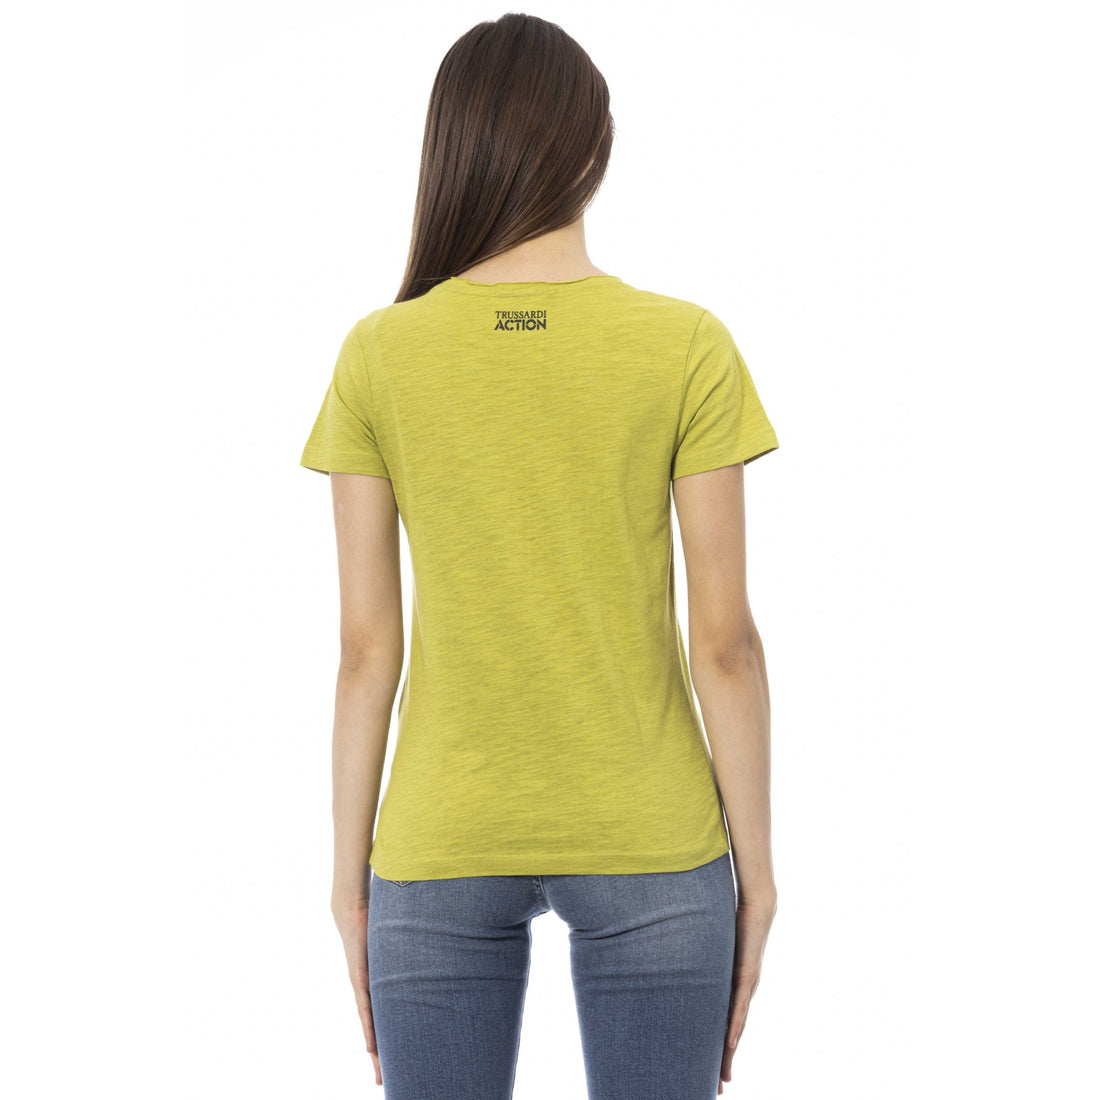 Trussardi Action Green Cotton Tops & T-Shirt